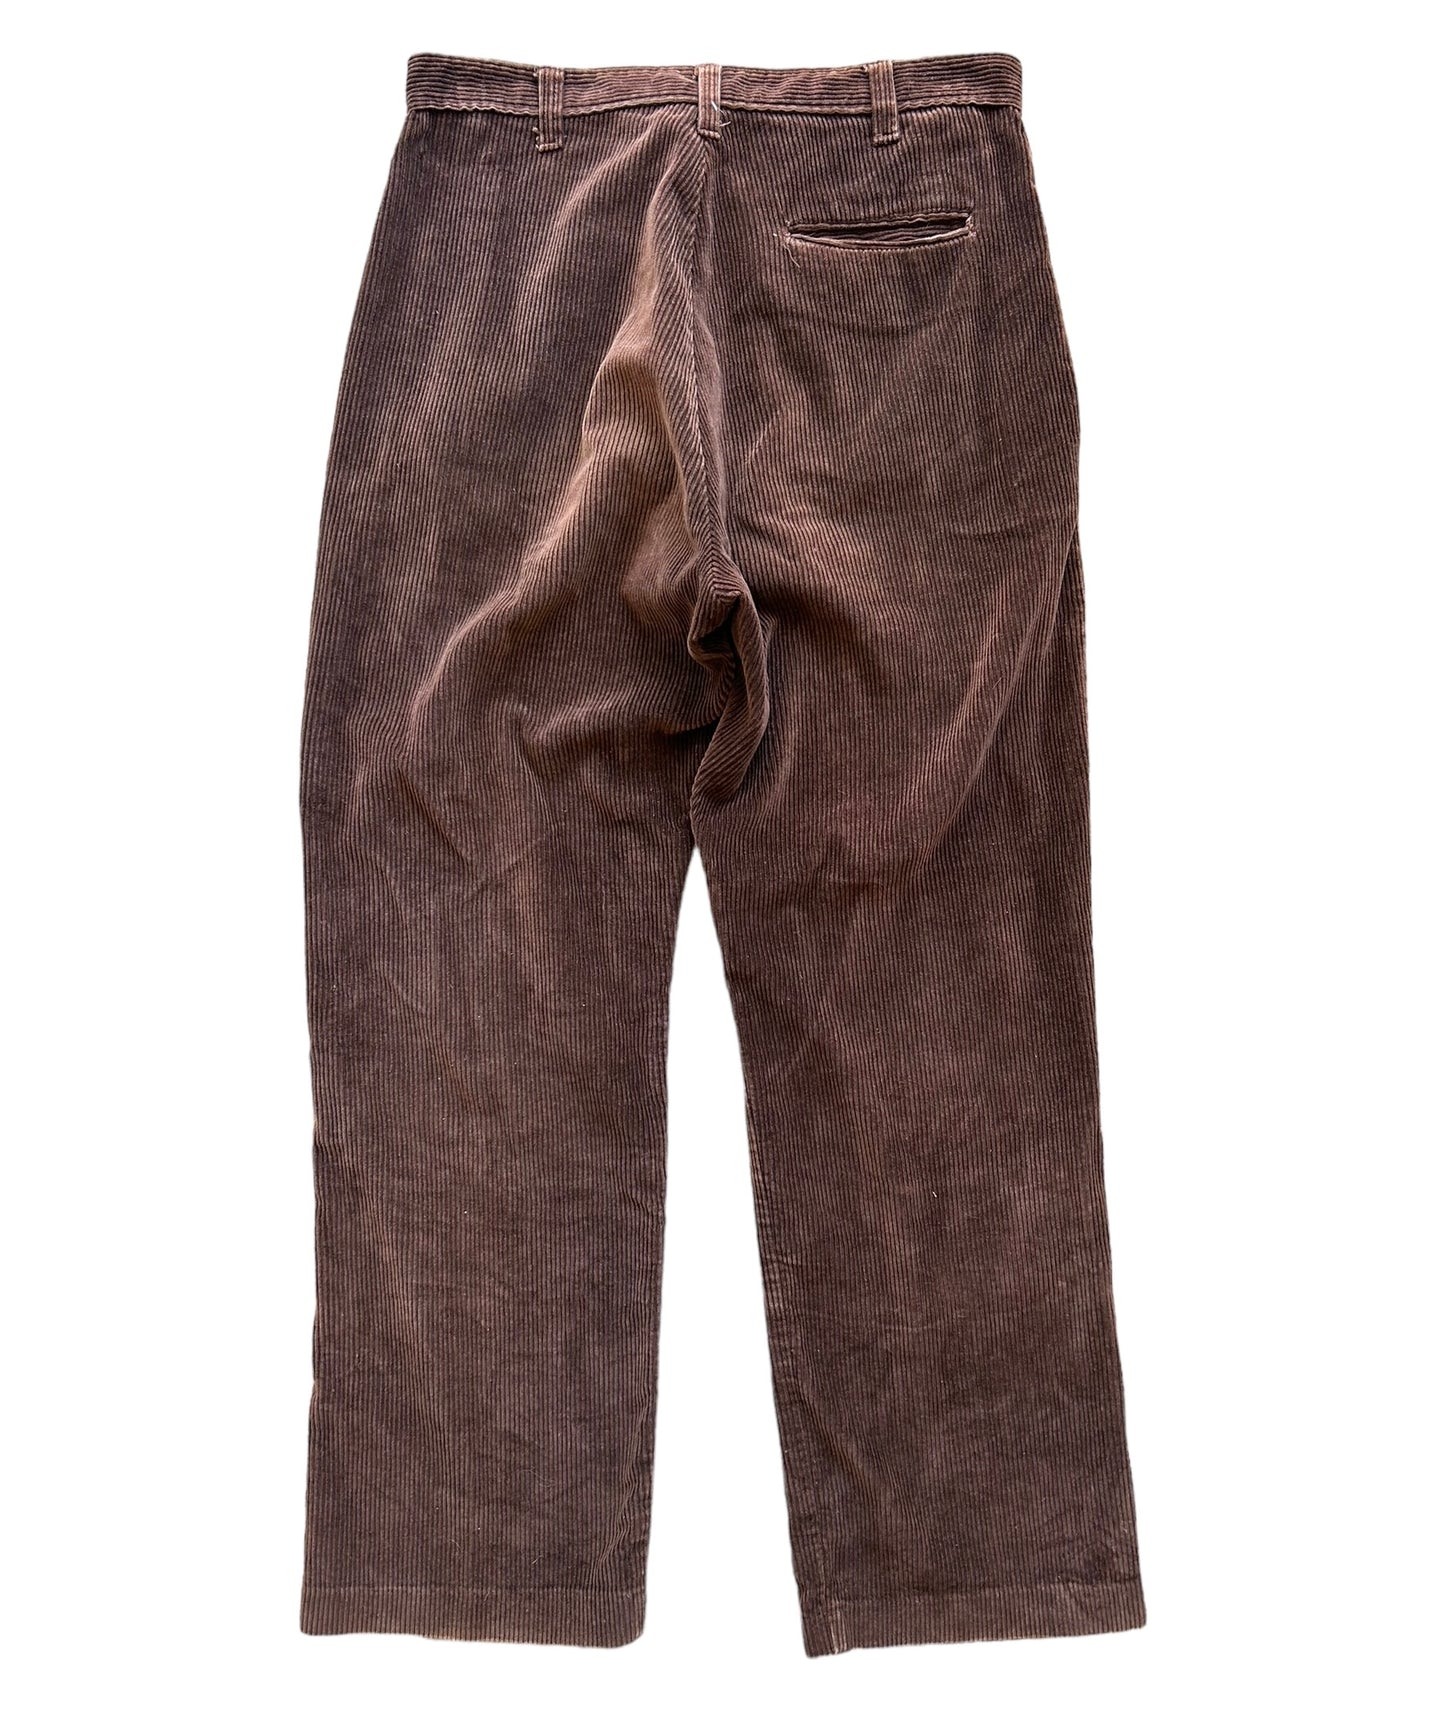 Vintage Corduroy Pants